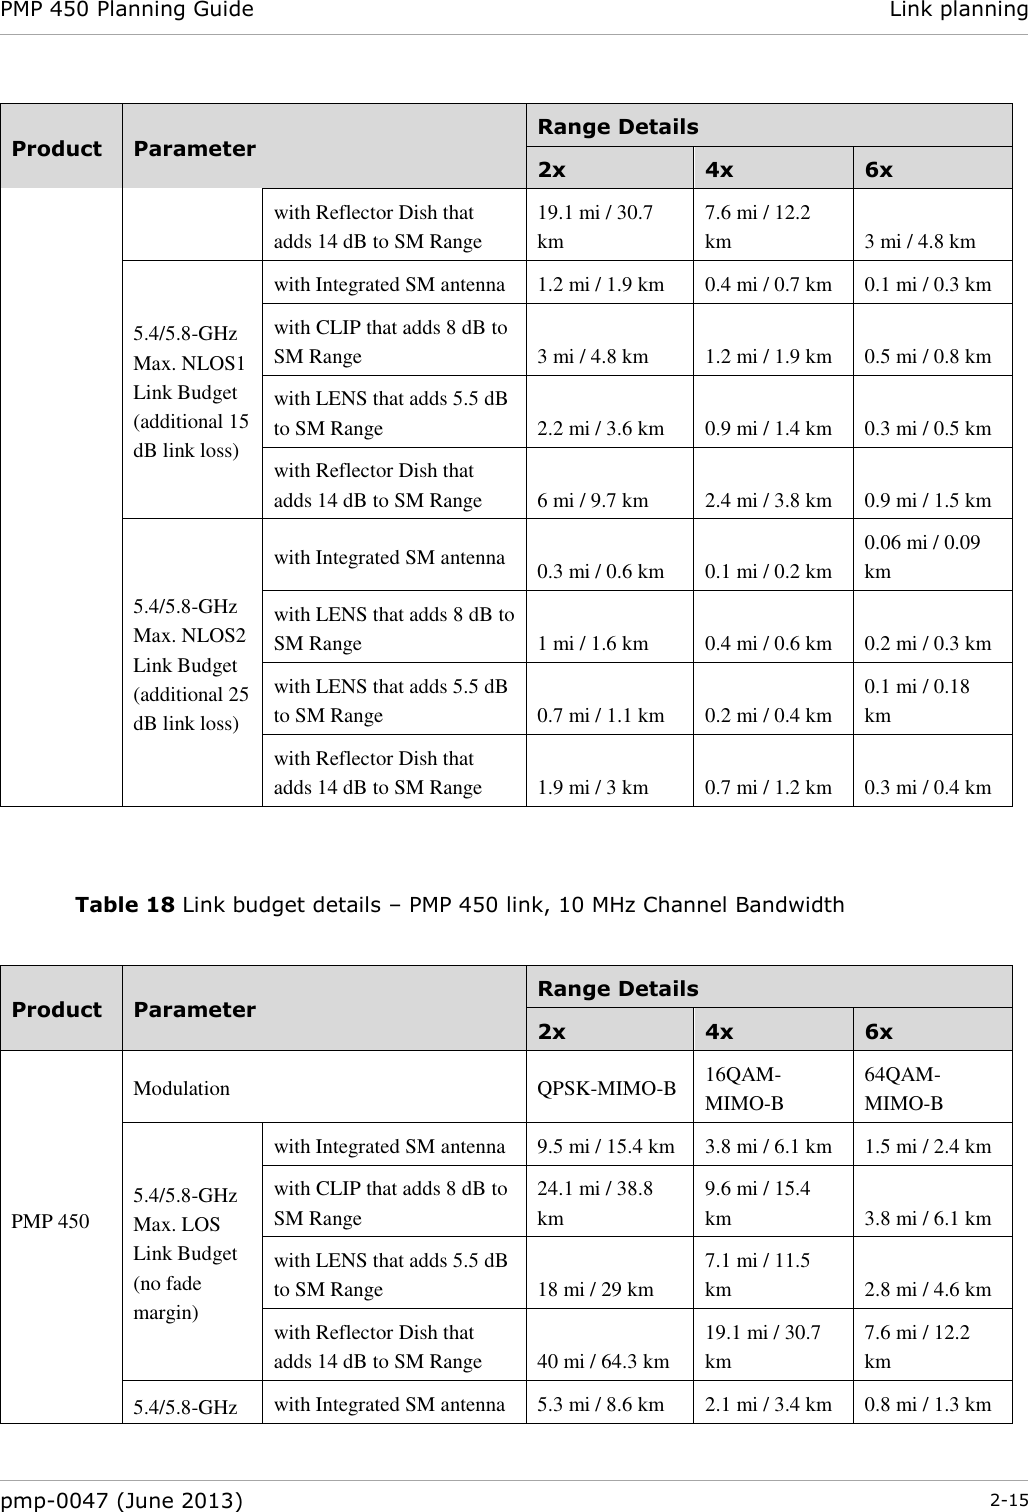 PMP 450 Planning Guide Link planning  pmp-0047 (June 2013)  2-15  Product Parameter Range Details 2x 4x 6x with Reflector Dish that adds 14 dB to SM Range 19.1 mi / 30.7 km 7.6 mi / 12.2 km 3 mi / 4.8 km 5.4/5.8-GHz Max. NLOS1 Link Budget (additional 15 dB link loss) with Integrated SM antenna 1.2 mi / 1.9 km 0.4 mi / 0.7 km 0.1 mi / 0.3 km with CLIP that adds 8 dB to SM Range 3 mi / 4.8 km 1.2 mi / 1.9 km 0.5 mi / 0.8 km with LENS that adds 5.5 dB to SM Range 2.2 mi / 3.6 km 0.9 mi / 1.4 km 0.3 mi / 0.5 km with Reflector Dish that adds 14 dB to SM Range 6 mi / 9.7 km 2.4 mi / 3.8 km 0.9 mi / 1.5 km 5.4/5.8-GHz Max. NLOS2 Link Budget (additional 25 dB link loss) with Integrated SM antenna 0.3 mi / 0.6 km 0.1 mi / 0.2 km 0.06 mi / 0.09 km with LENS that adds 8 dB to SM Range 1 mi / 1.6 km 0.4 mi / 0.6 km 0.2 mi / 0.3 km with LENS that adds 5.5 dB to SM Range 0.7 mi / 1.1 km 0.2 mi / 0.4 km 0.1 mi / 0.18 km with Reflector Dish that adds 14 dB to SM Range 1.9 mi / 3 km 0.7 mi / 1.2 km 0.3 mi / 0.4 km   Table 18 Link budget details – PMP 450 link, 10 MHz Channel Bandwidth  Product Parameter Range Details 2x 4x 6x PMP 450   Modulation QPSK-MIMO-B 16QAM-MIMO-B 64QAM-MIMO-B 5.4/5.8-GHz Max. LOS Link Budget (no fade margin) with Integrated SM antenna 9.5 mi / 15.4 km 3.8 mi / 6.1 km 1.5 mi / 2.4 km with CLIP that adds 8 dB to SM Range 24.1 mi / 38.8 km 9.6 mi / 15.4 km 3.8 mi / 6.1 km with LENS that adds 5.5 dB to SM Range 18 mi / 29 km 7.1 mi / 11.5 km 2.8 mi / 4.6 km with Reflector Dish that adds 14 dB to SM Range 40 mi / 64.3 km 19.1 mi / 30.7 km 7.6 mi / 12.2 km 5.4/5.8-GHz with Integrated SM antenna 5.3 mi / 8.6 km 2.1 mi / 3.4 km 0.8 mi / 1.3 km 